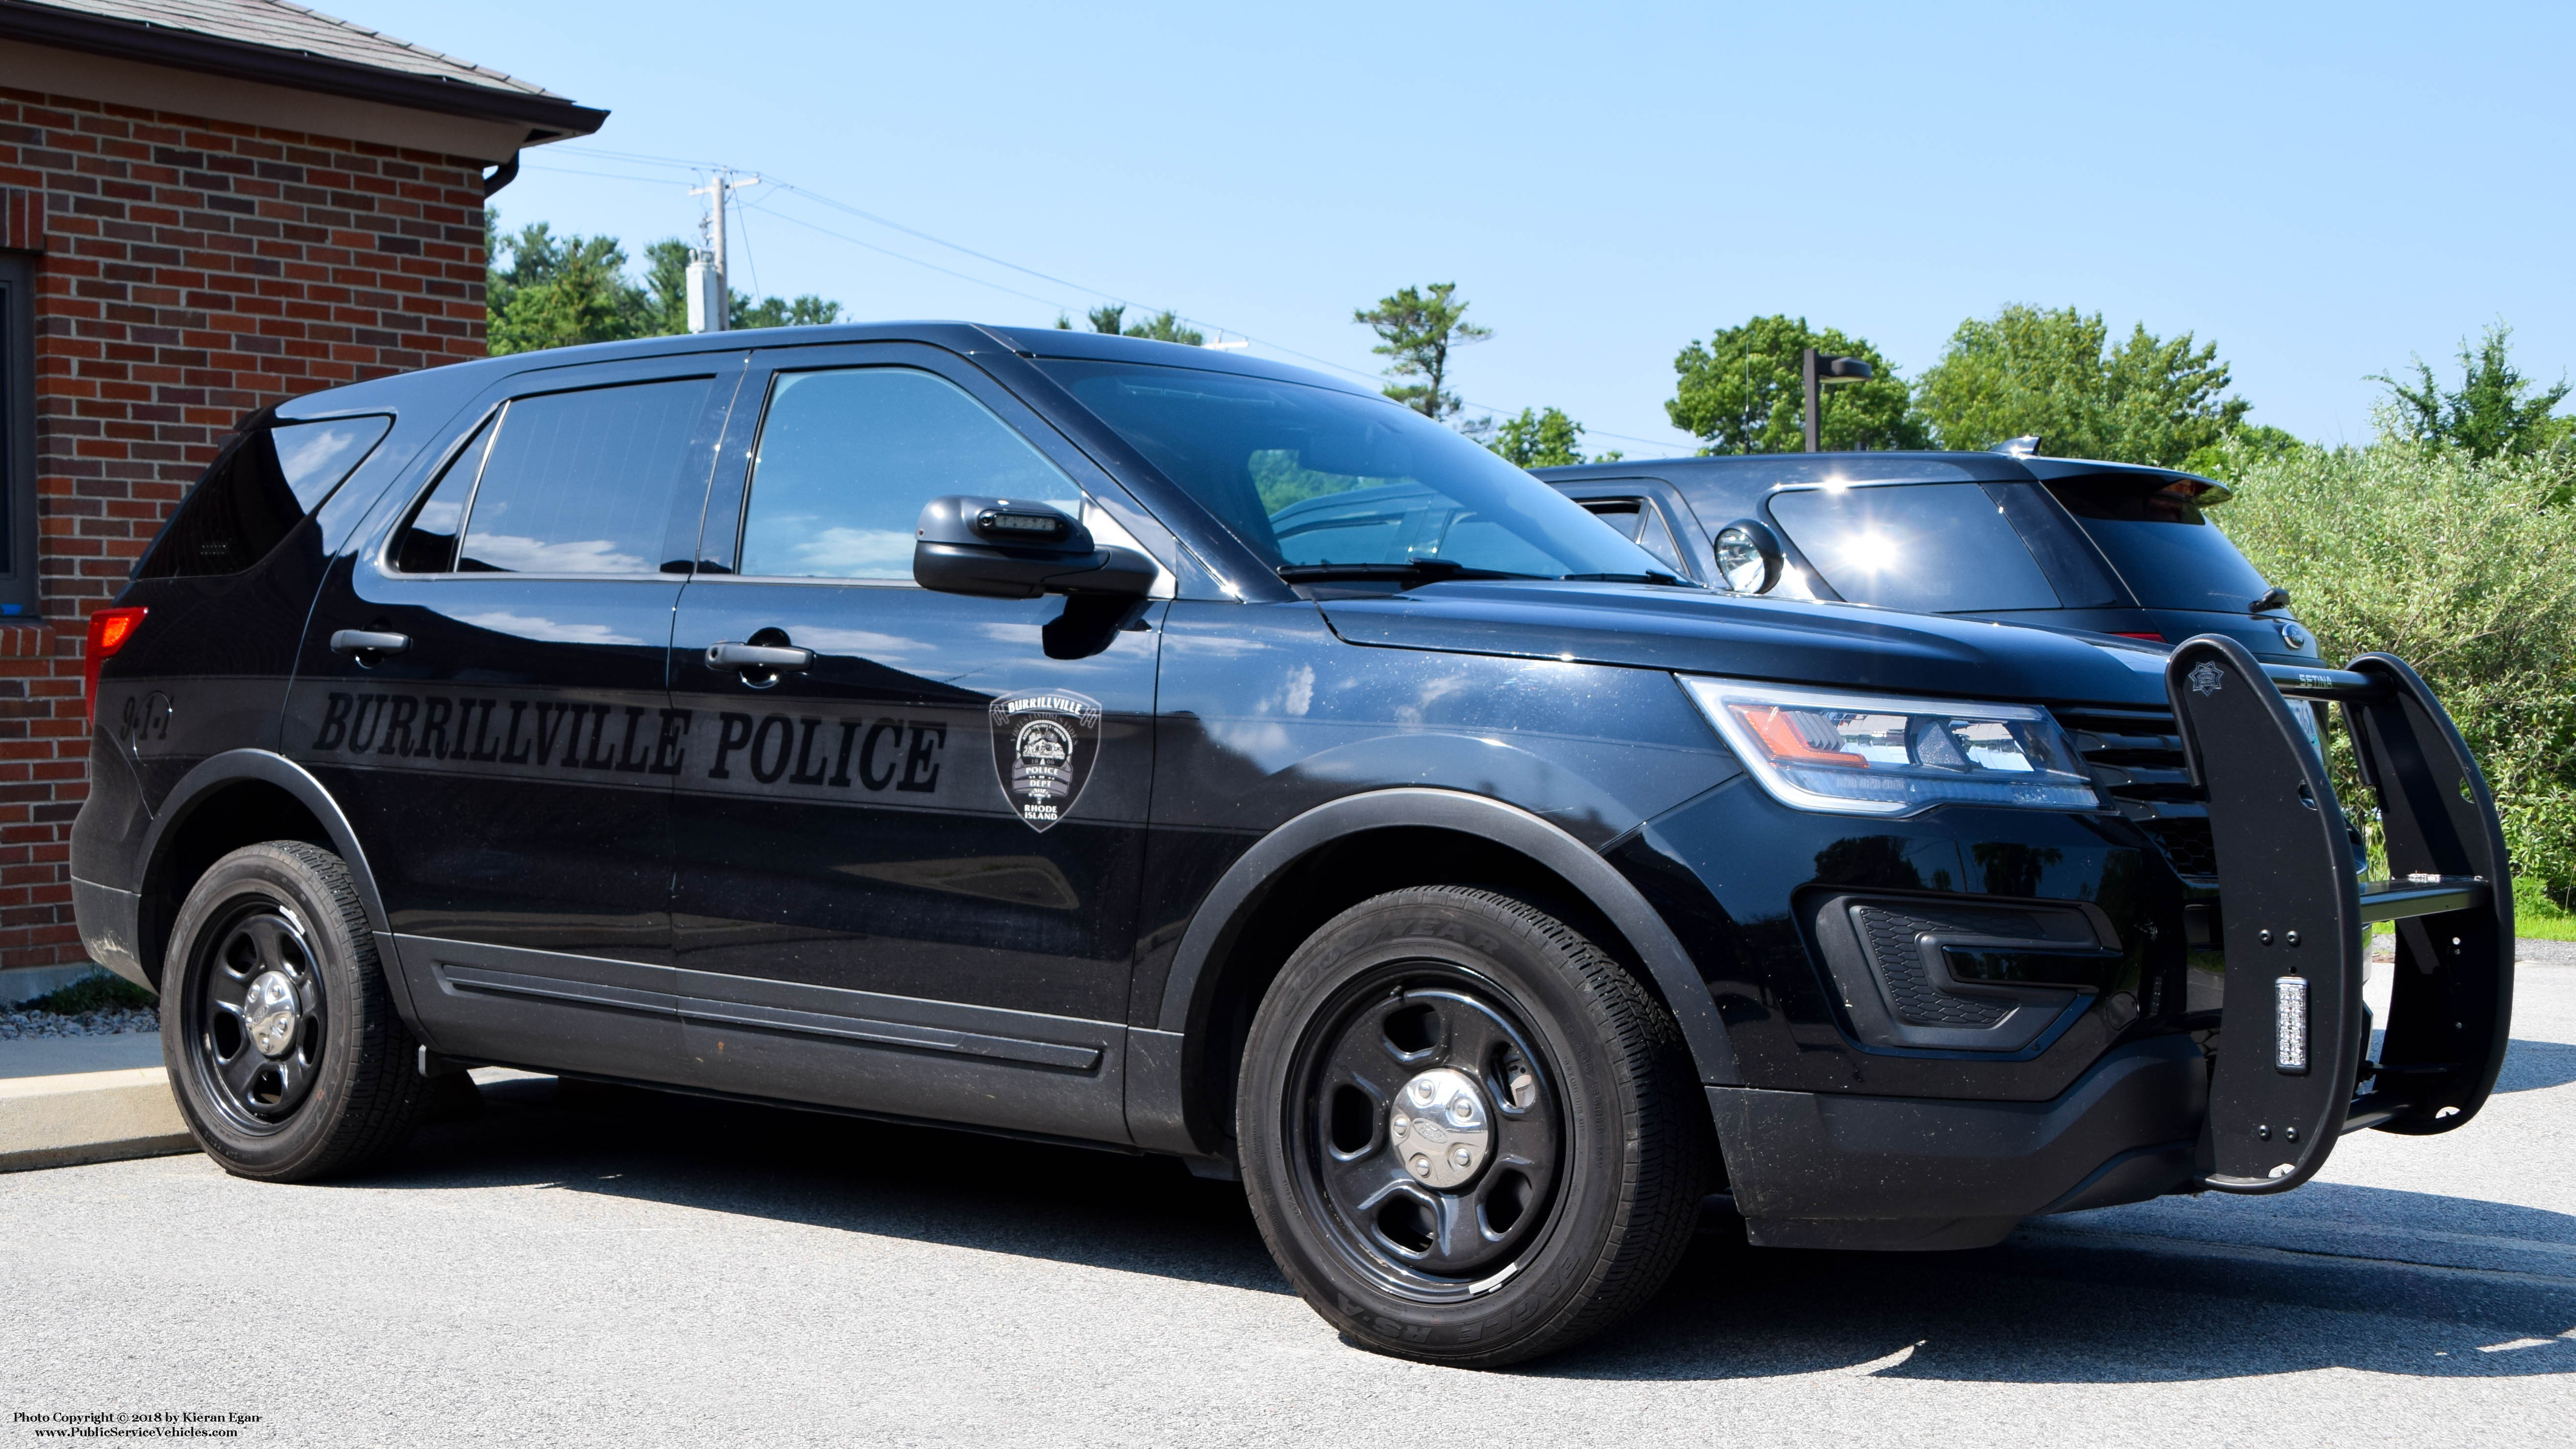 A photo  of Burrillville Police
            Cruiser 6998, a 2018 Ford Police Interceptor Utility             taken by Kieran Egan